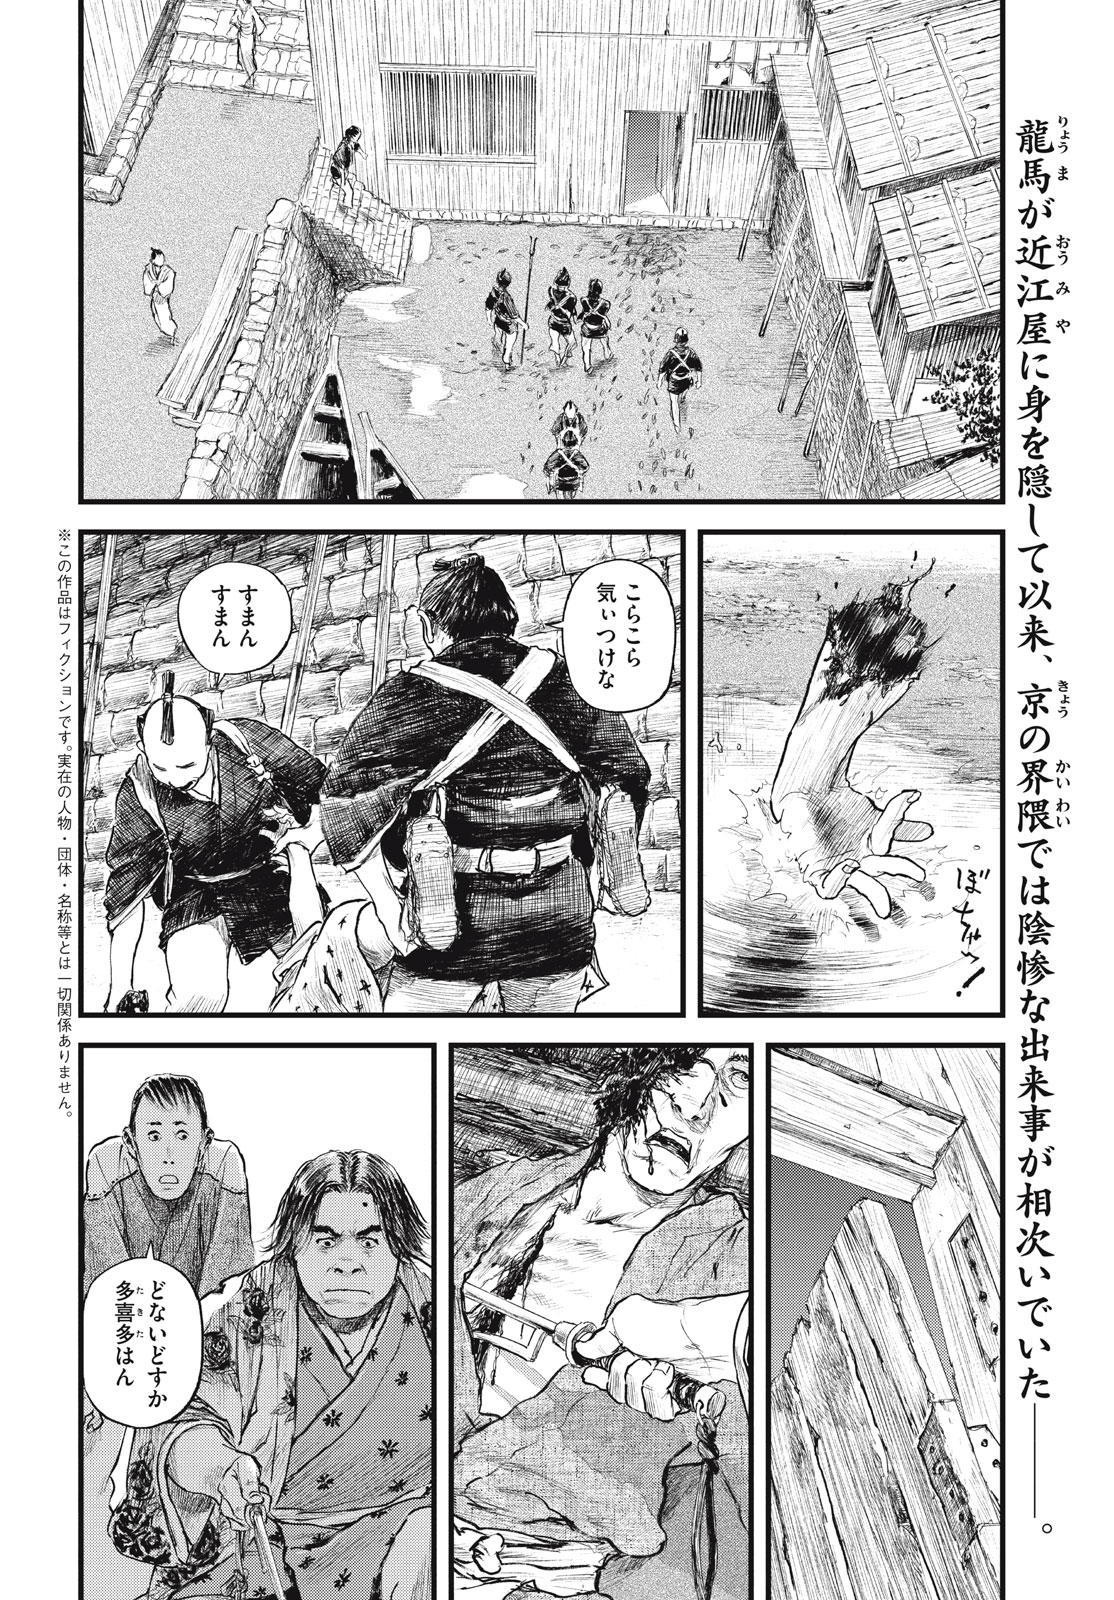 Blade of the Immortal: Bakumatsu Arc - Chapter 51 - Page 2